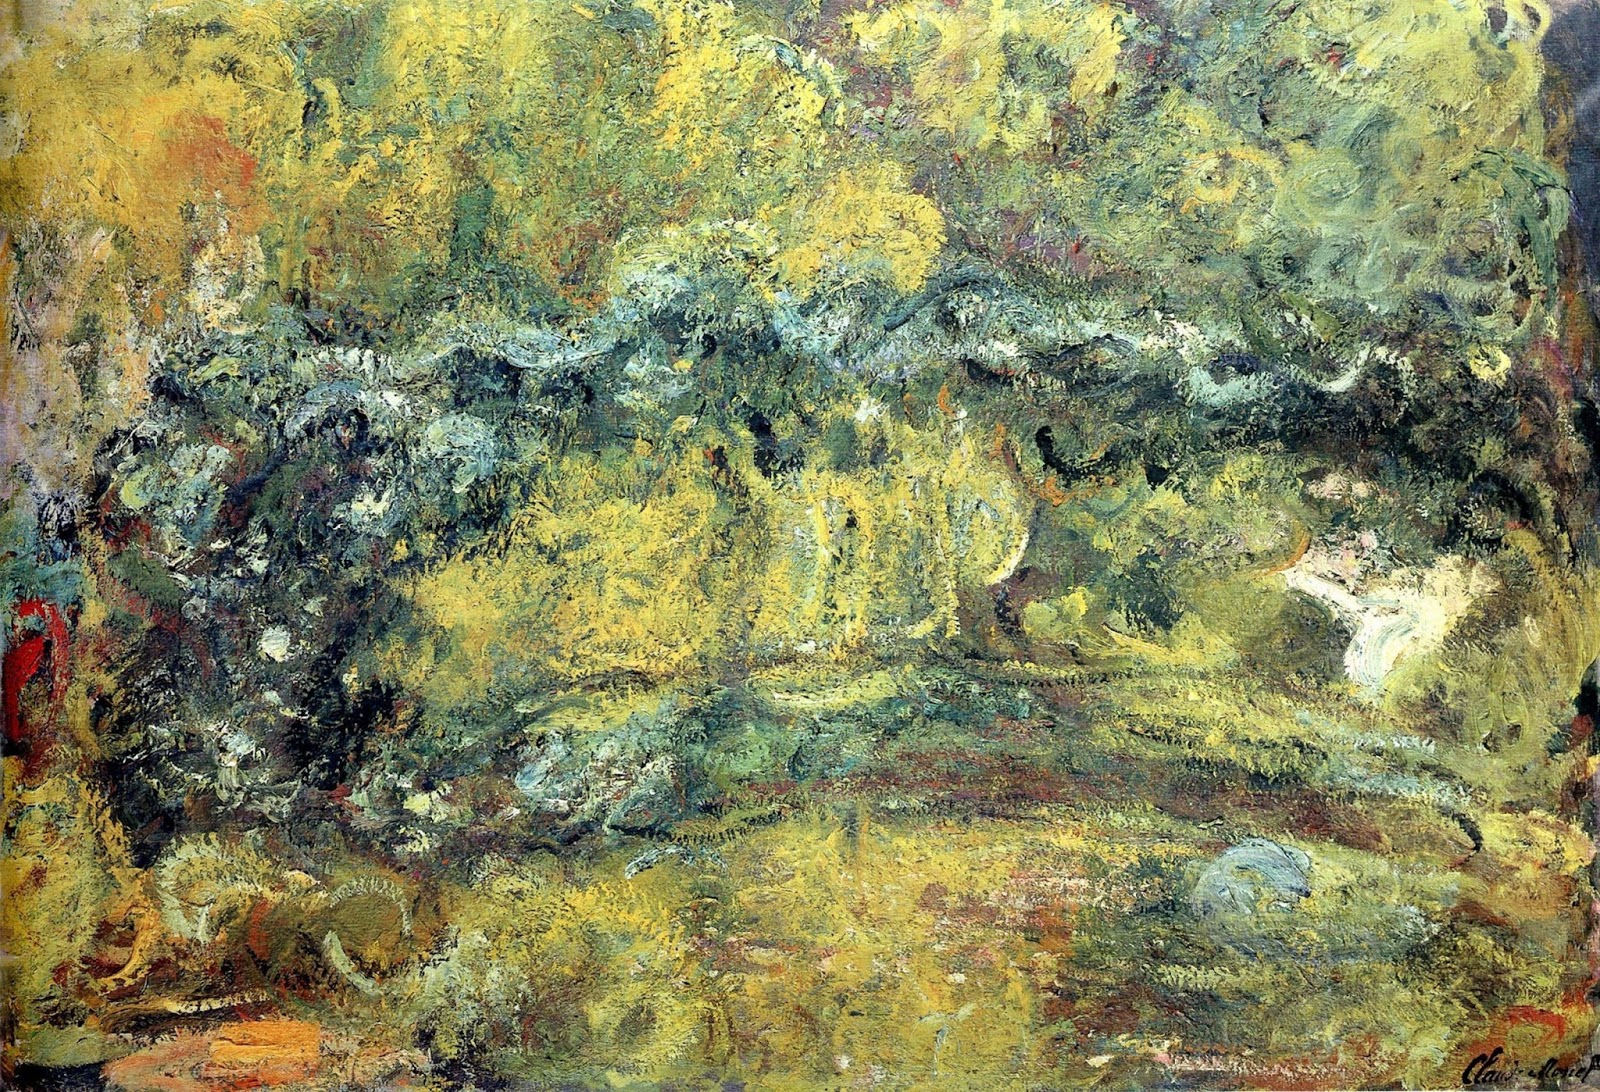 Claude+Monet-1840-1926 (771).jpg